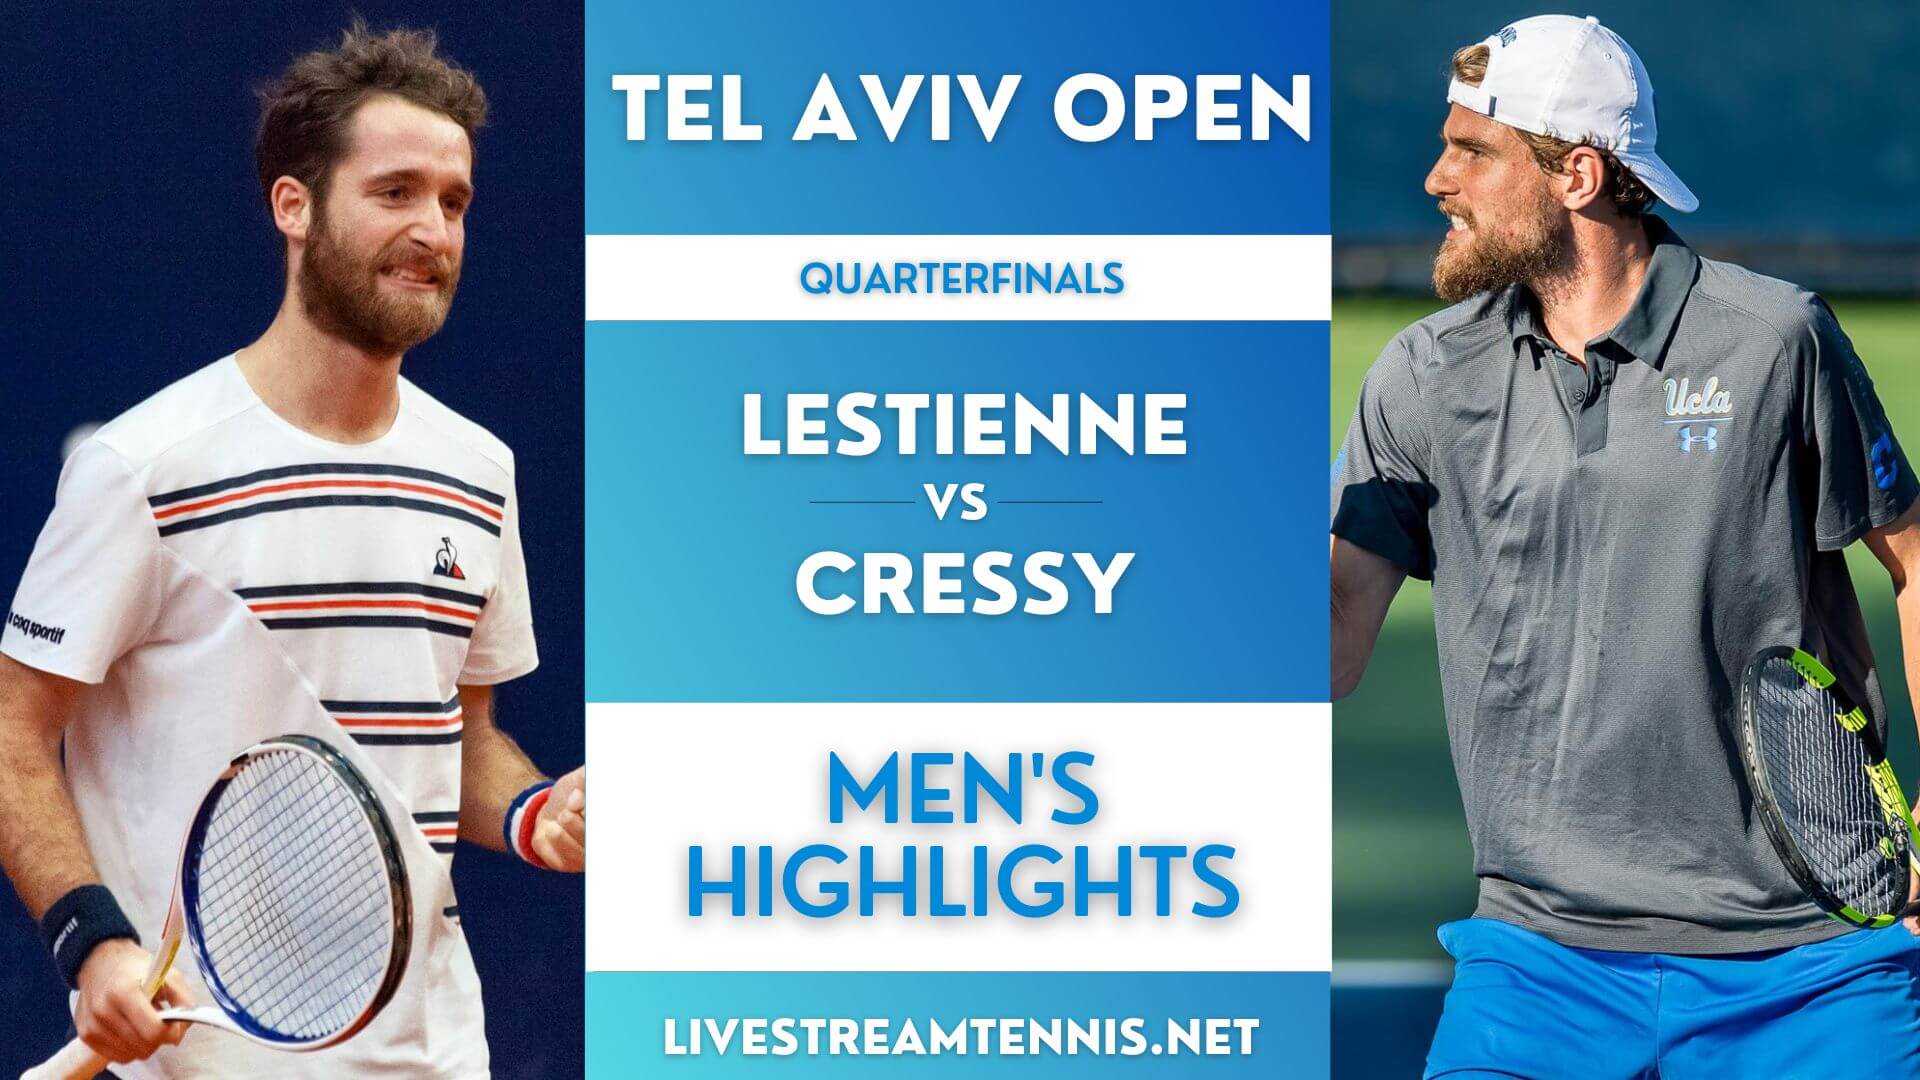 Tel Aviv Open Men Quarterfinal 2 Highlights 2022